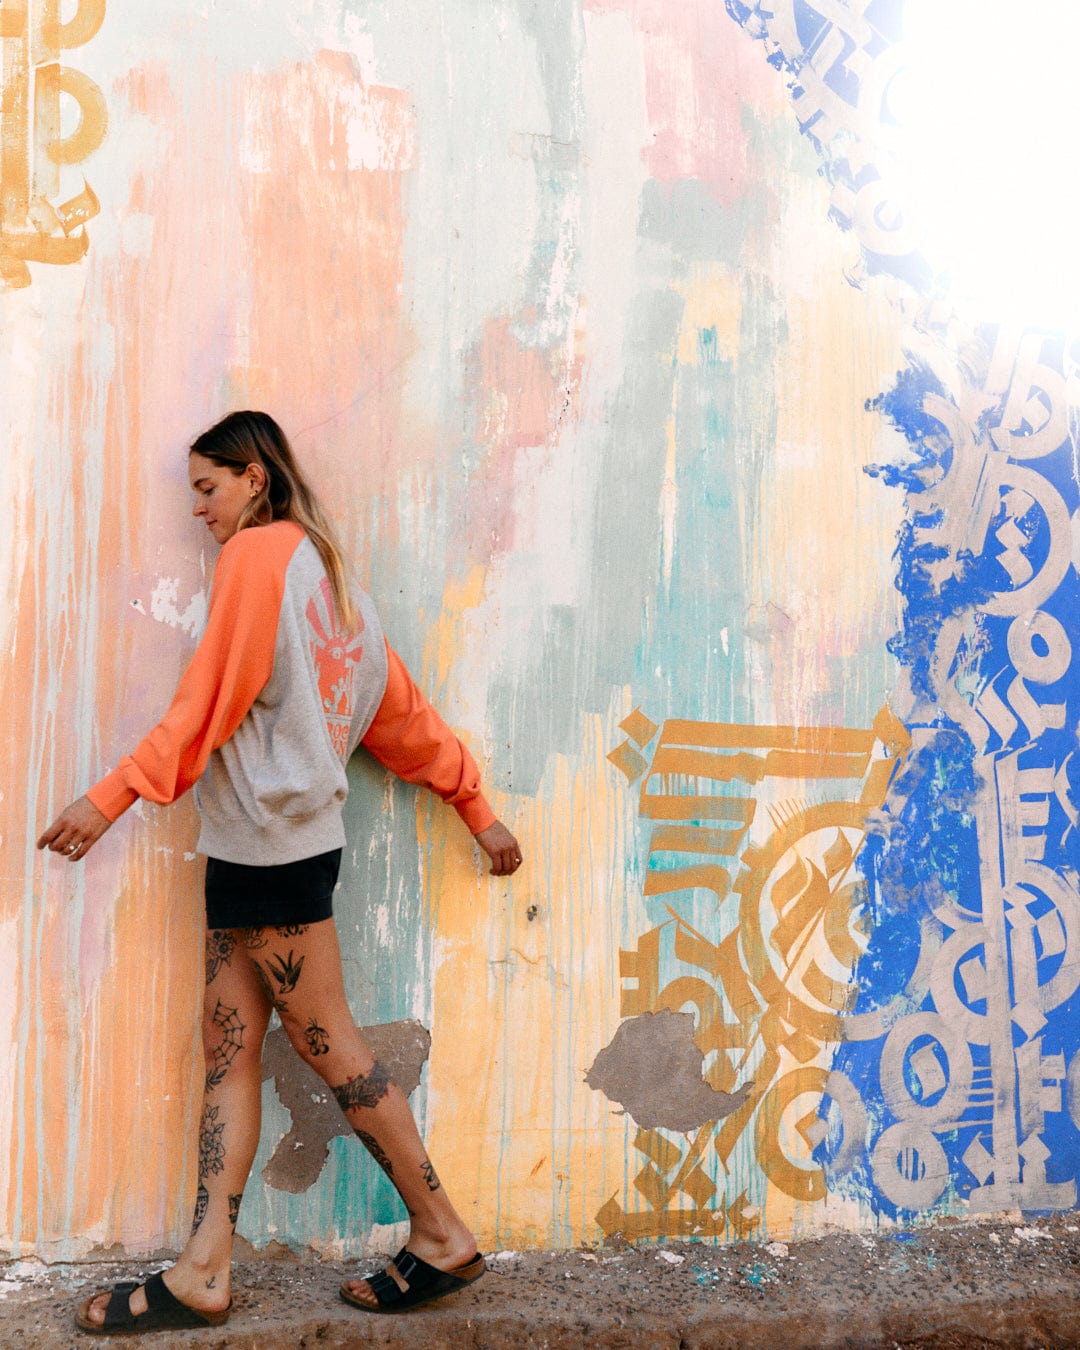 A woman walks past a colorful graffiti wall, wearing an orange Saltrock Sunshine - Womens Raglan Sweat - Grey Marl sweatshirt and black shorts, viewed in profile.